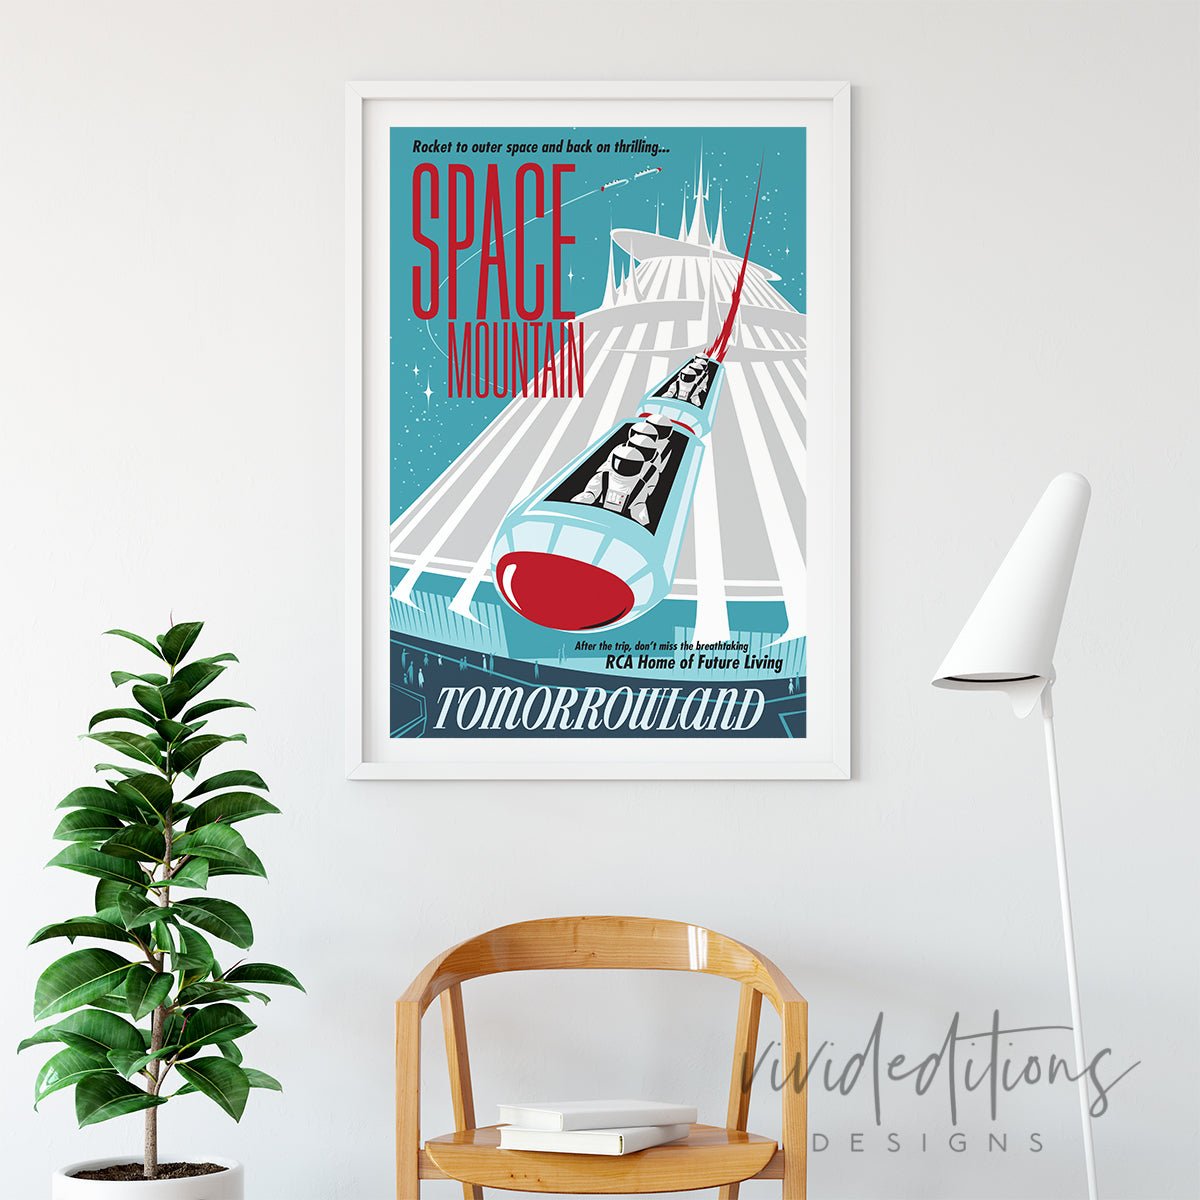 Space Mountain Tomorrowland, Disneyland Poster Print - VividEditions